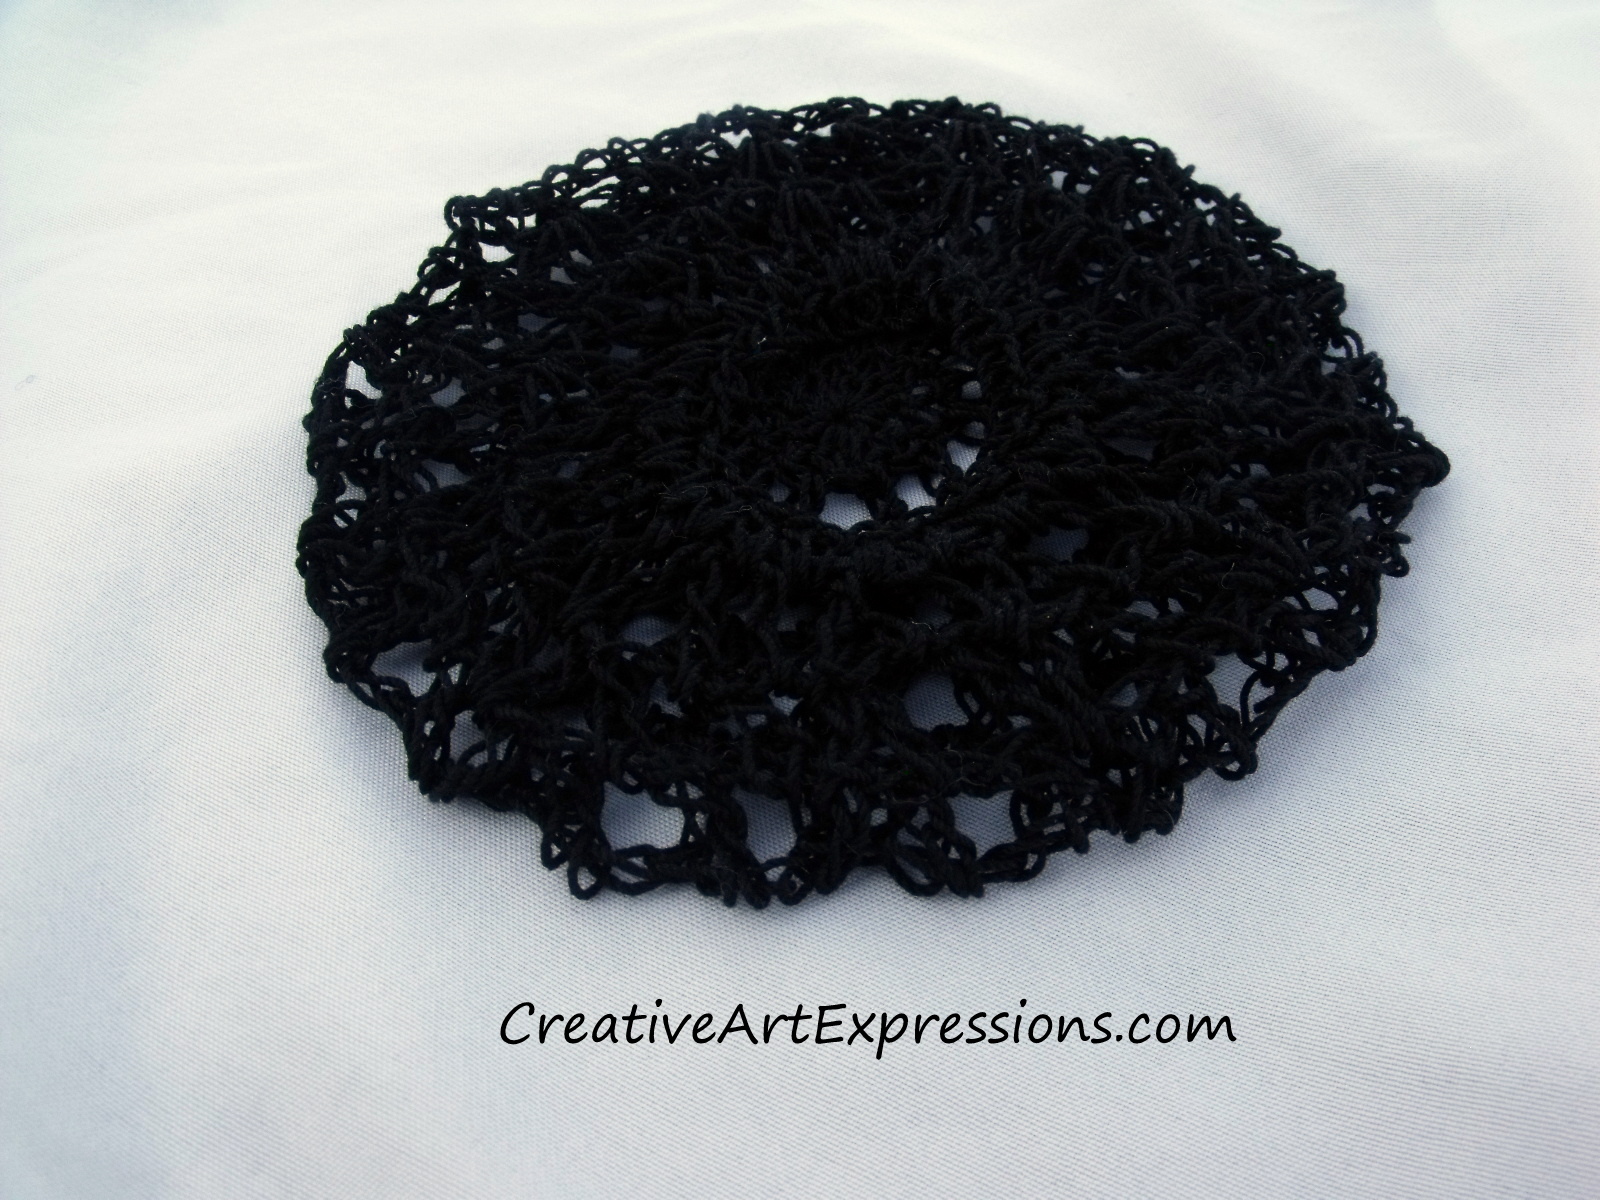 Creative Art Expressions Hand Crocheted Black Bun Cover